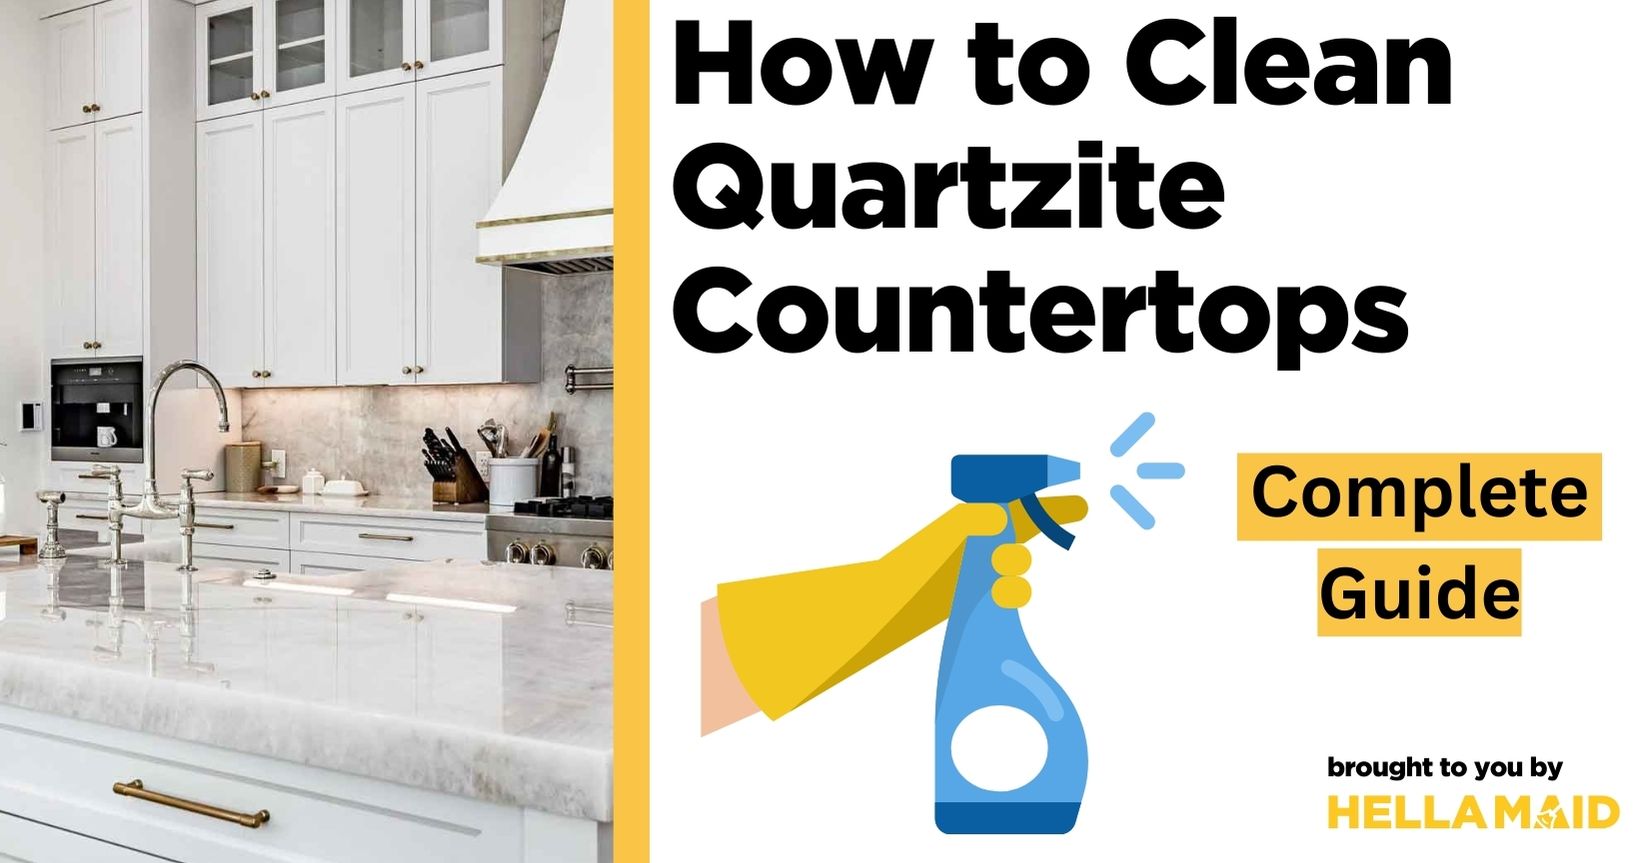 How to clean quartz countertops